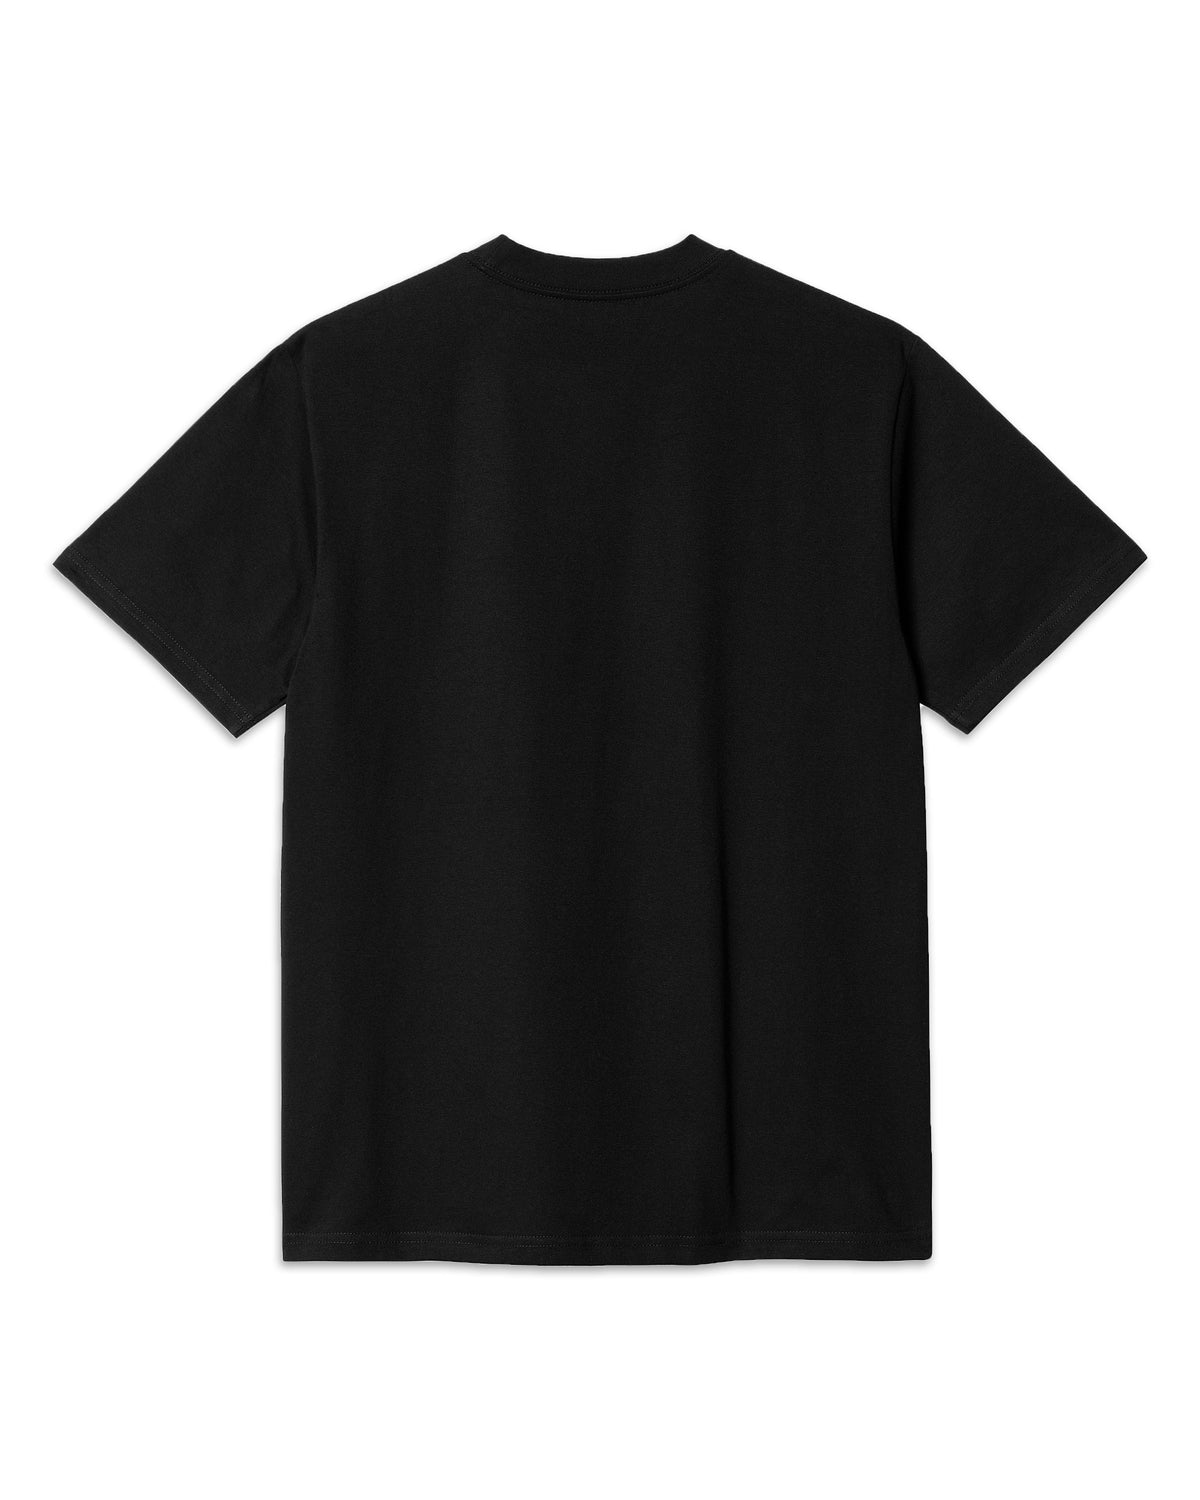 Carhartt Wip New Frontier T-shirt Nero